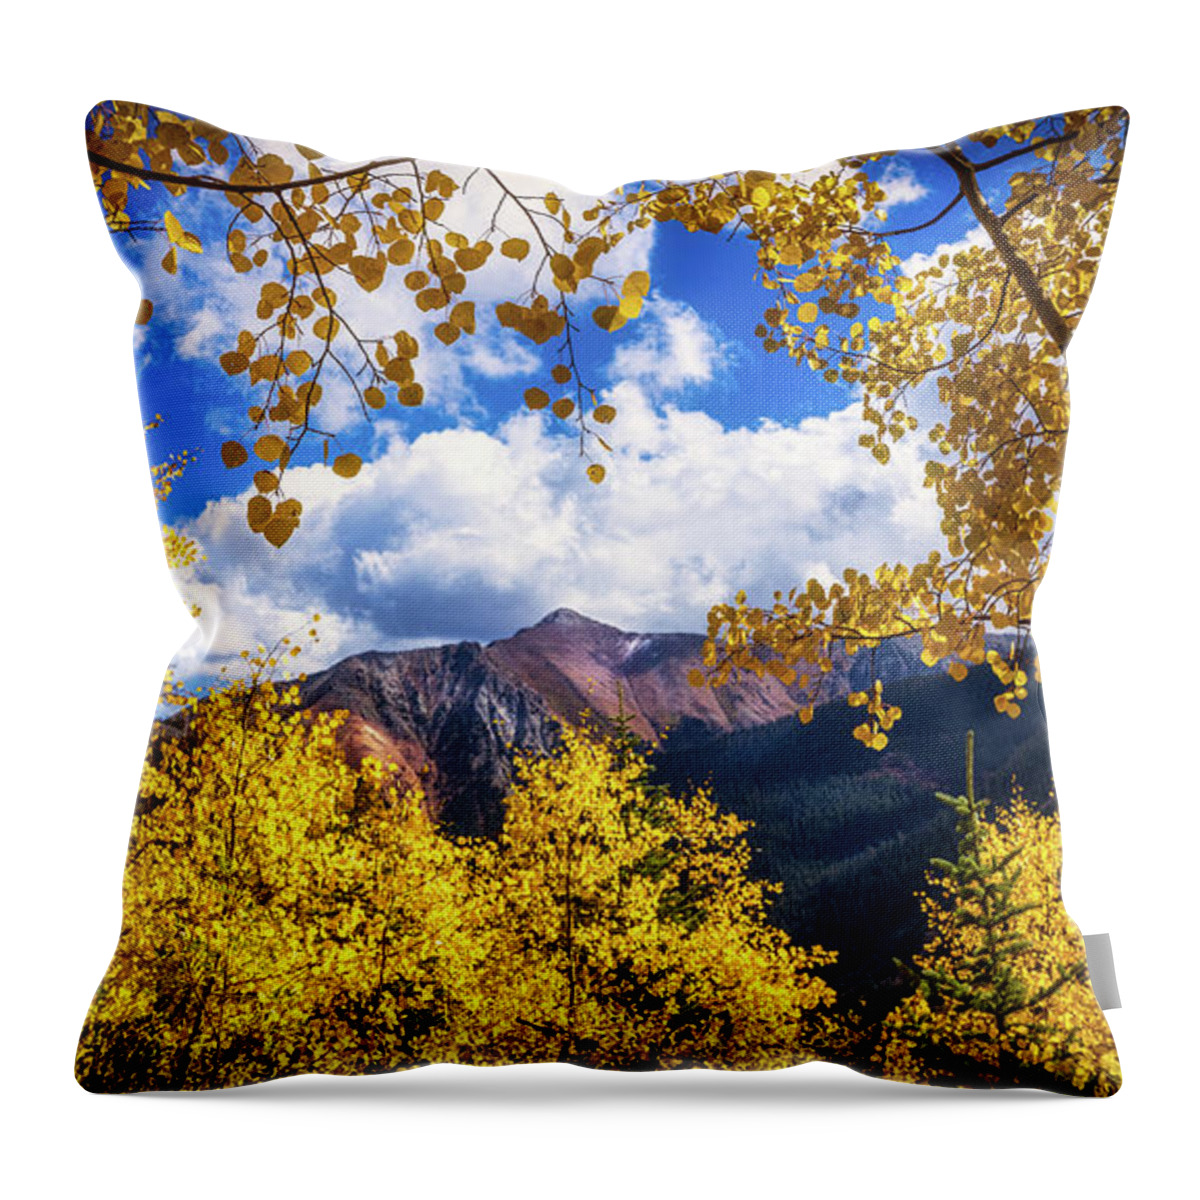 Colorado Throw Pillow featuring the photograph Golden Window by Bradley Morris